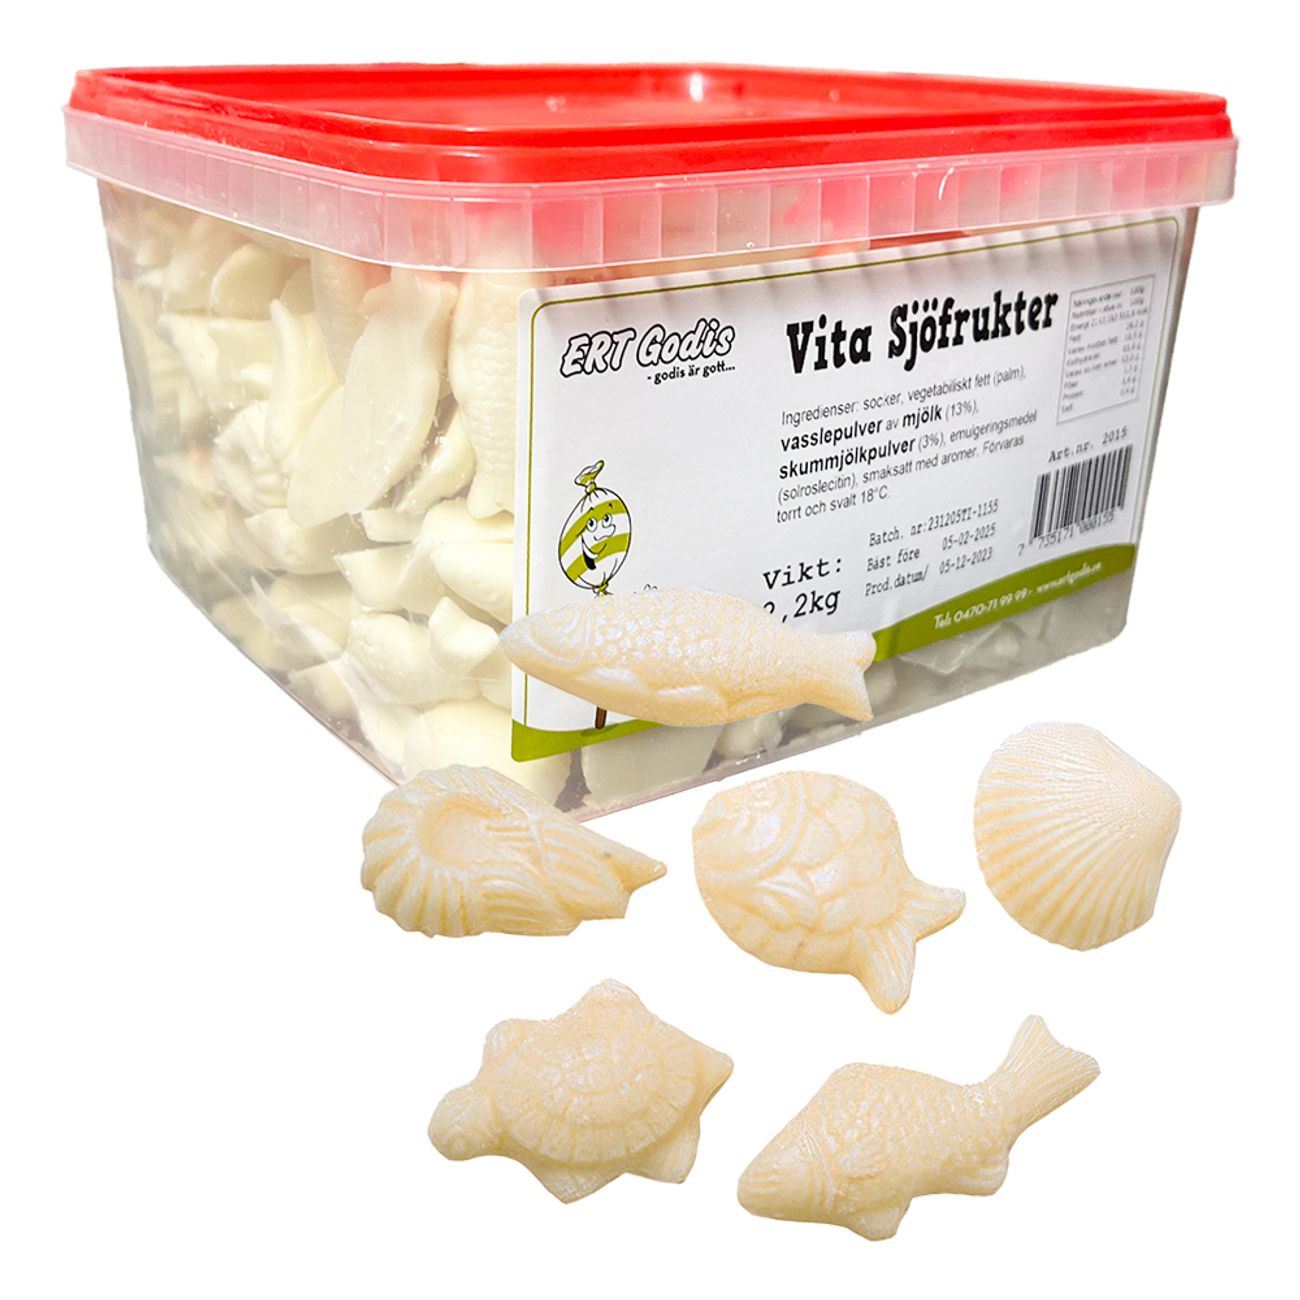 vita-chokladsjofrukter-storpack-96416-2